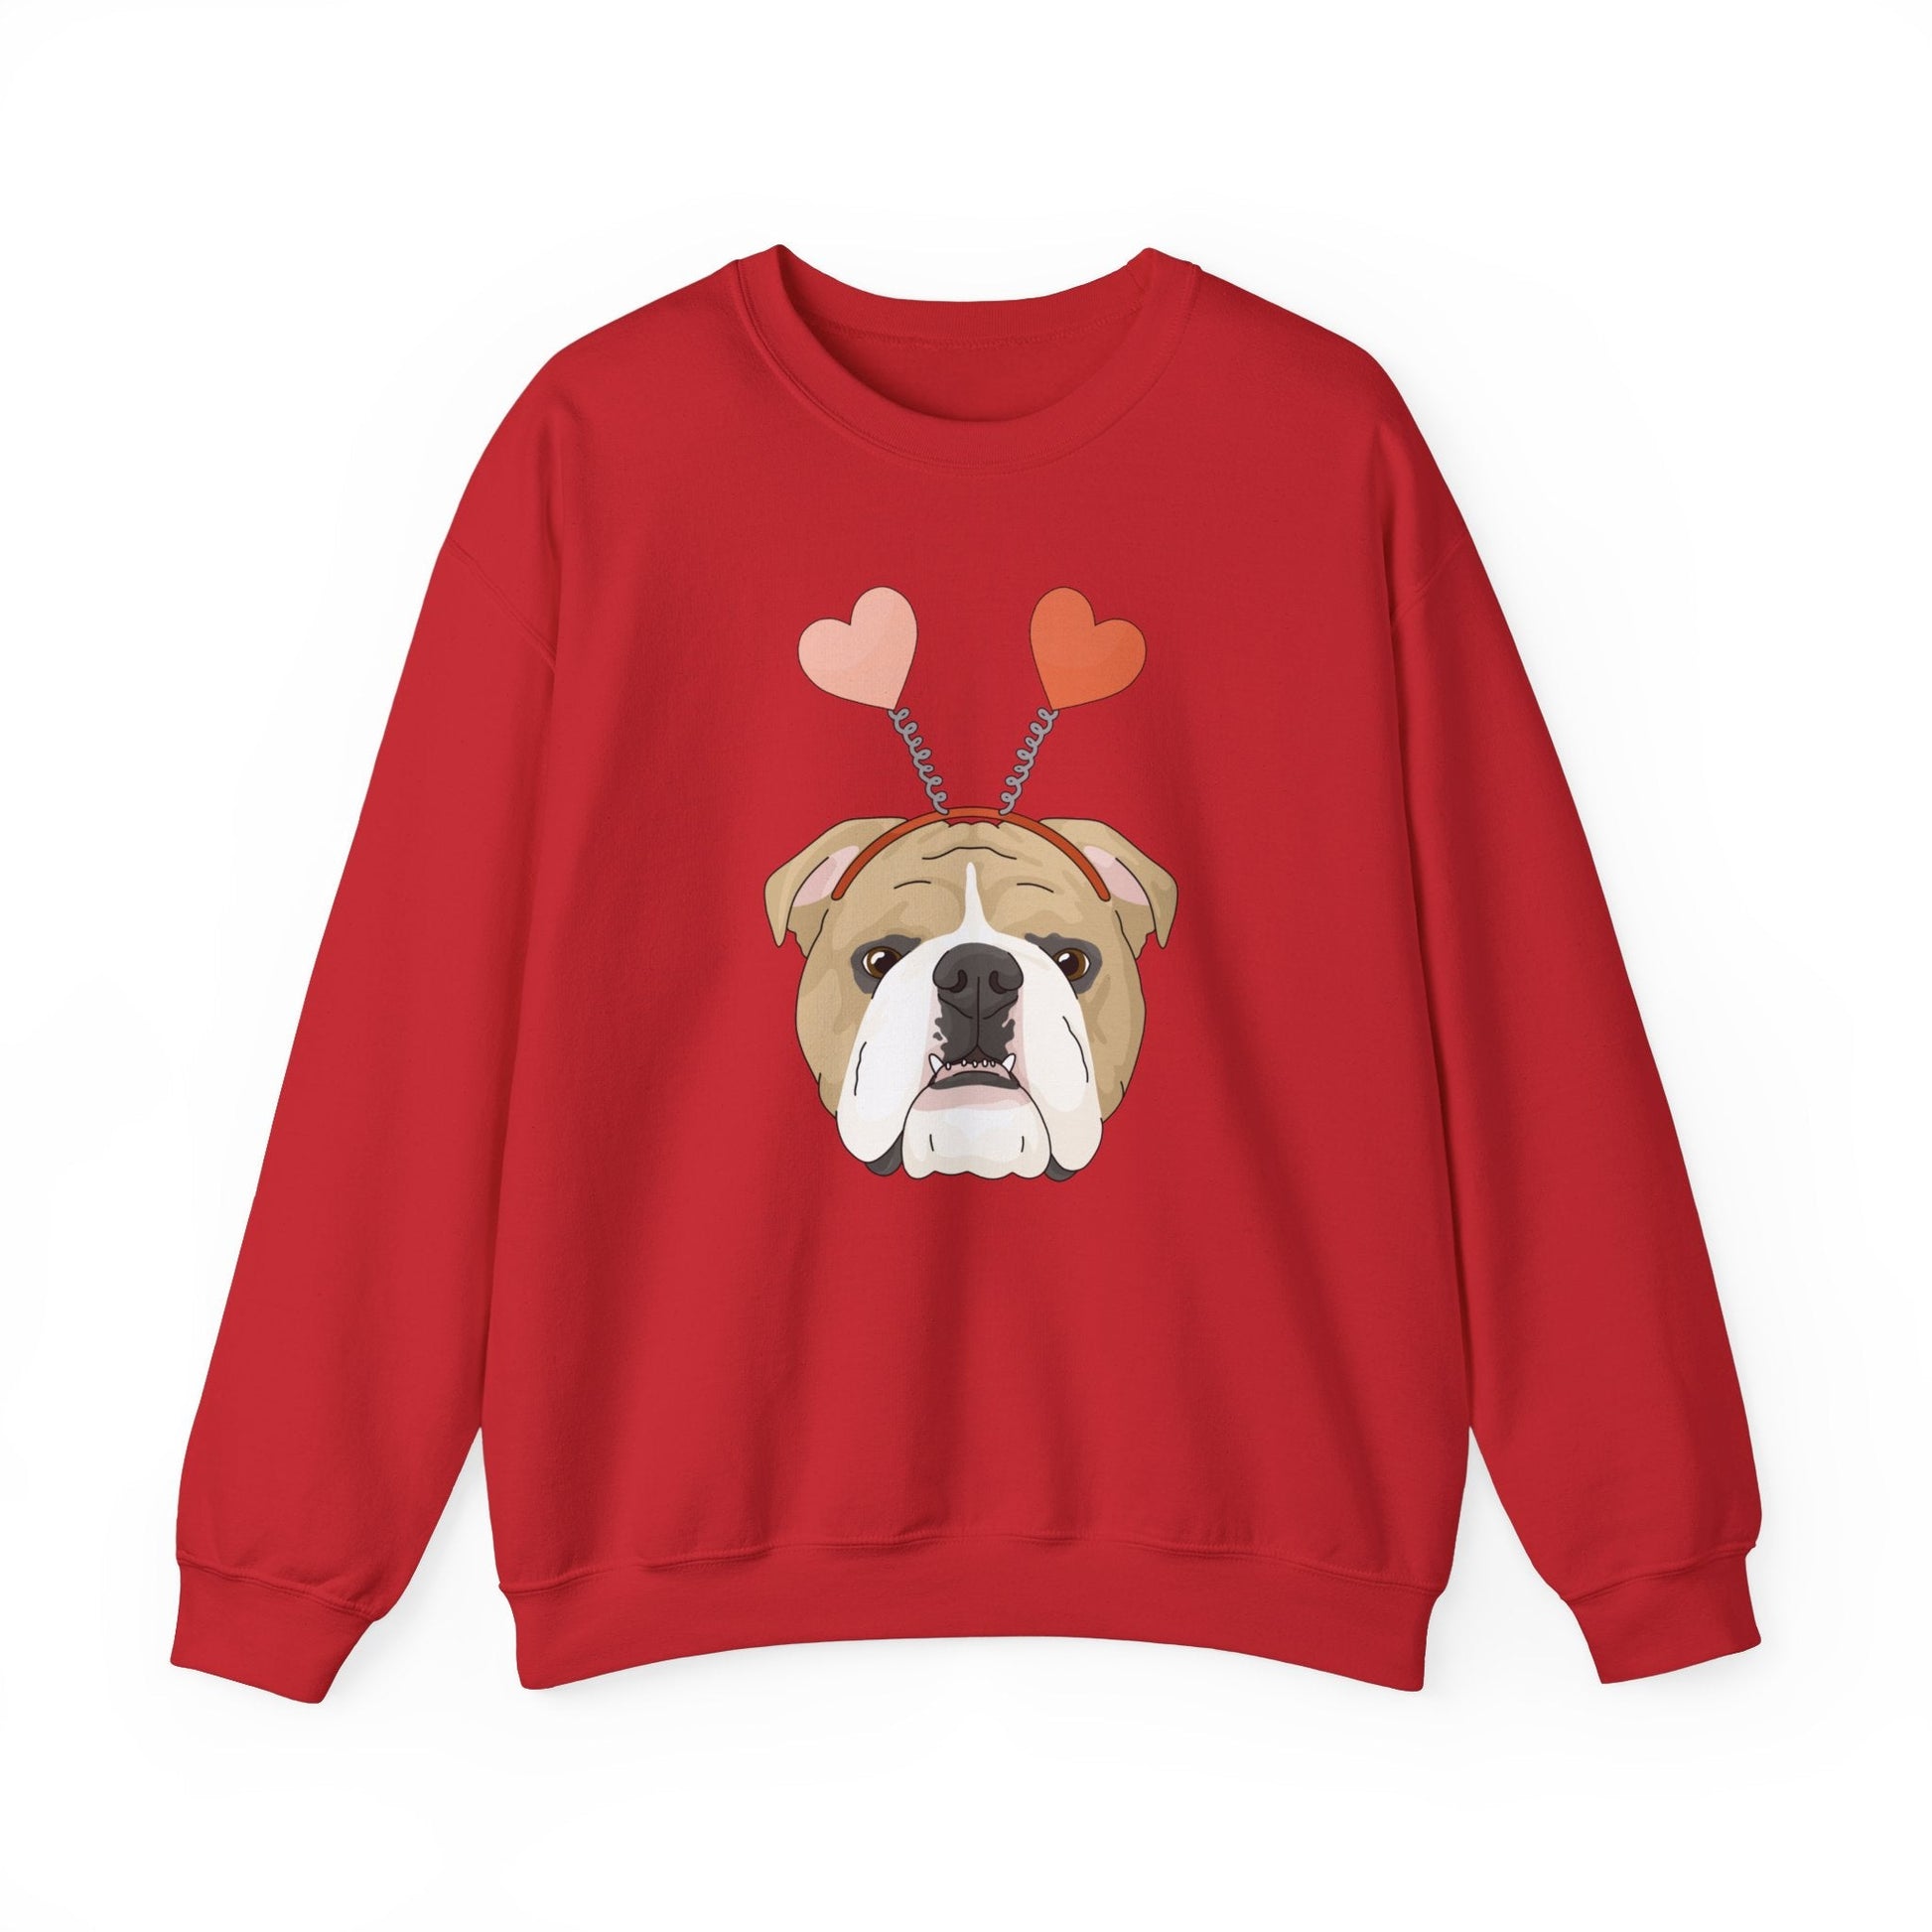 A Very Bulldog Valentine | Crewneck Sweatshirt - Detezi Designs-21157689797416018887